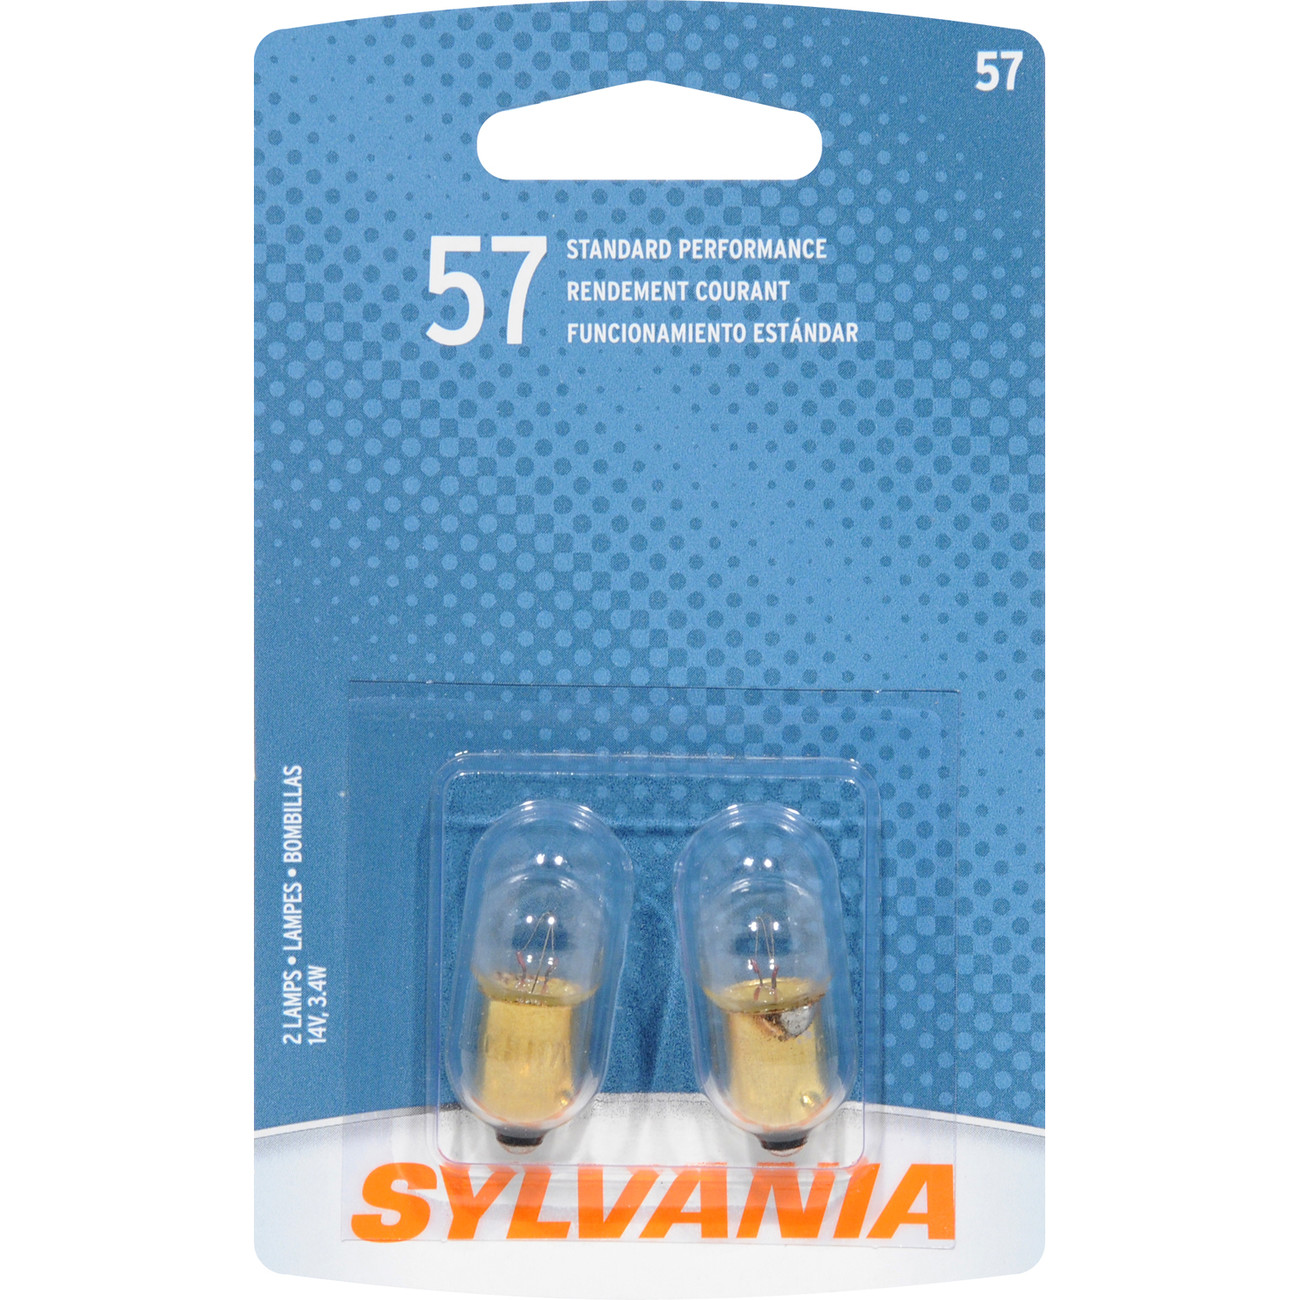 SYLVANIA RETAIL PACKS - Blister Pack Twin Clock Light - SYR 57.BP2